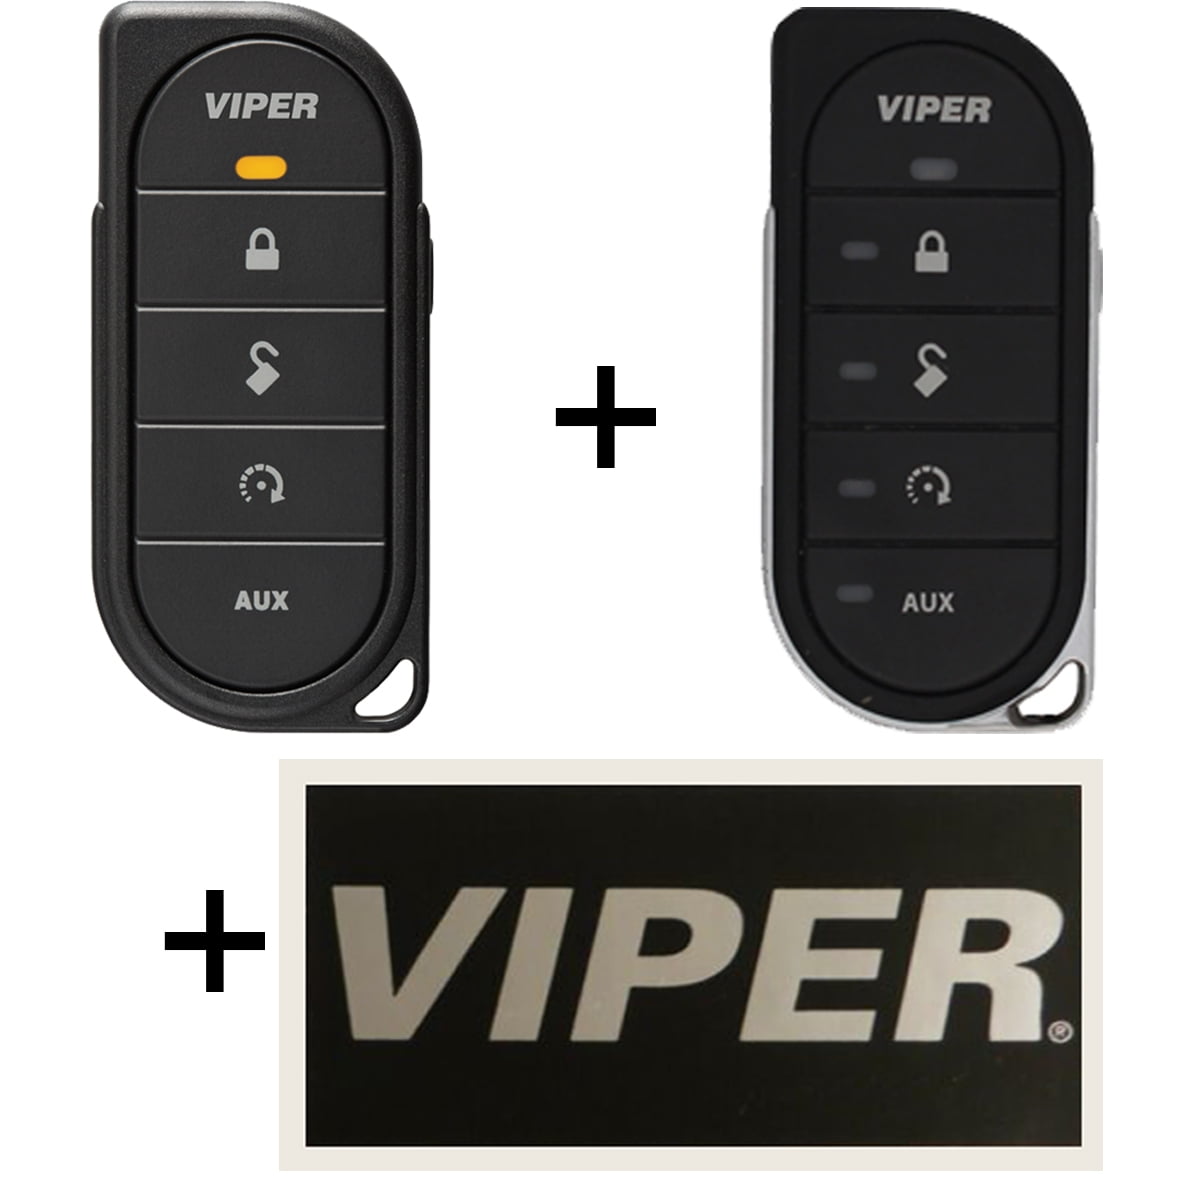 5610V Viper 7656V High Quality Genuine LEATHER Remote Control Cover For 5606V 